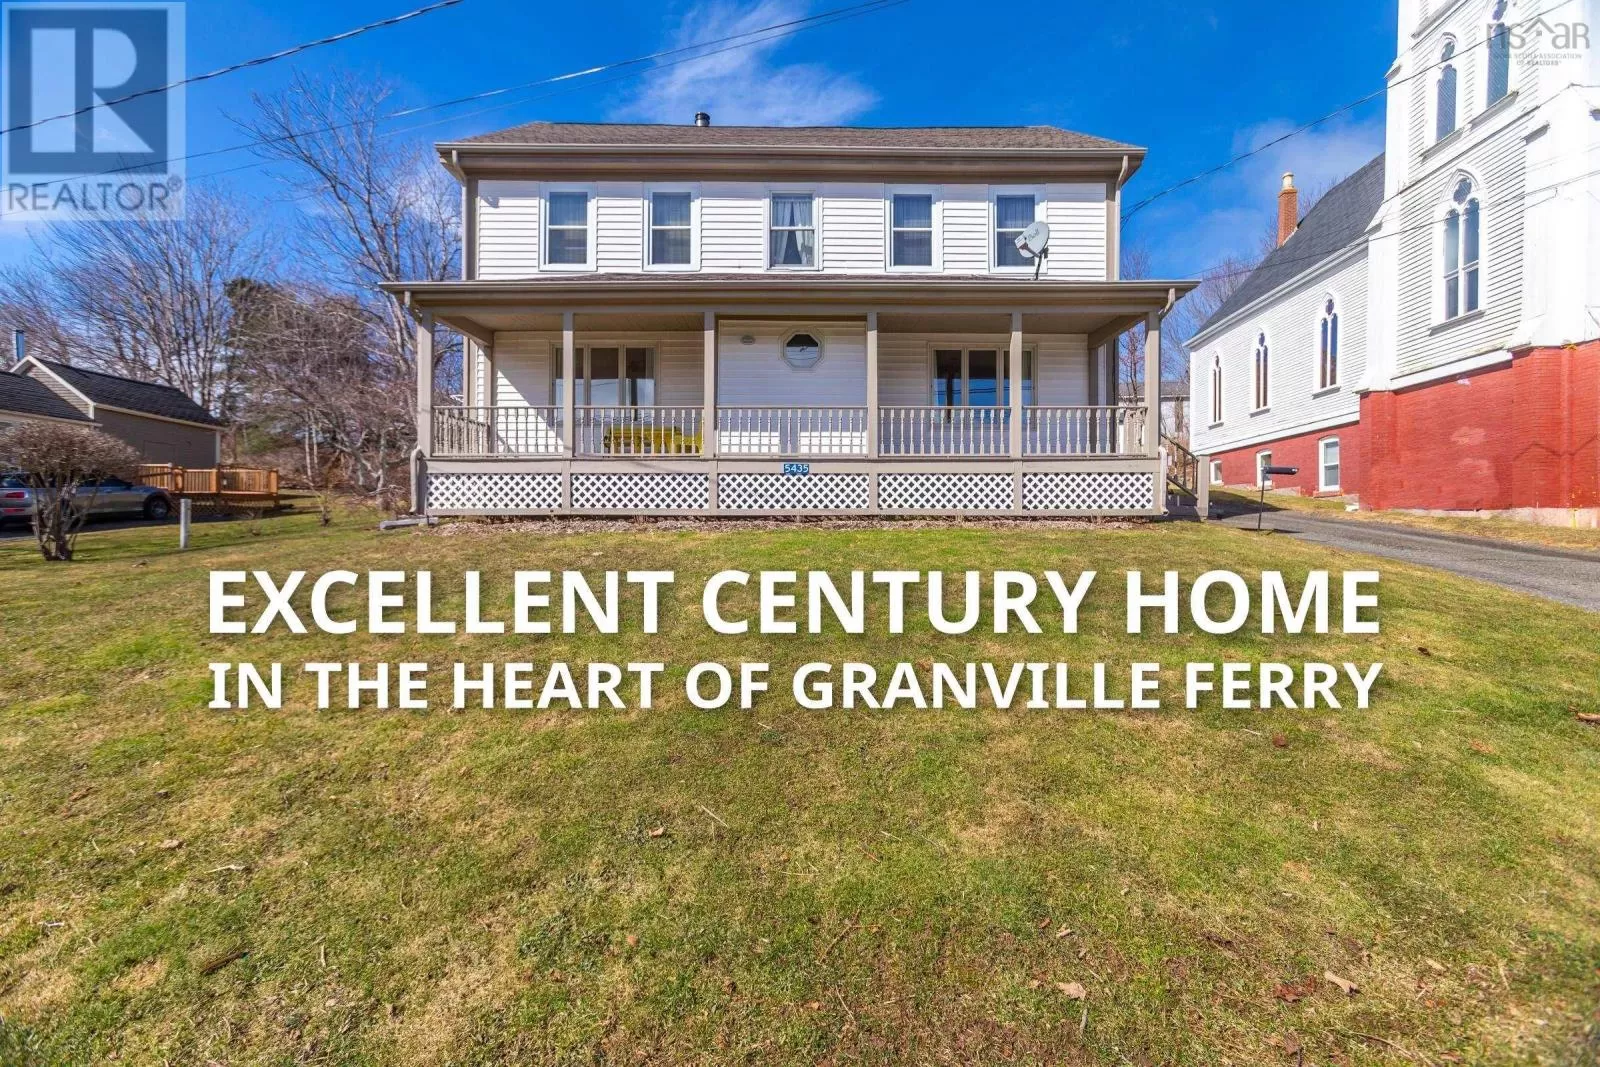 House for rent: 5435 Granville Road, Granville Ferry, Nova Scotia B0S 1A0